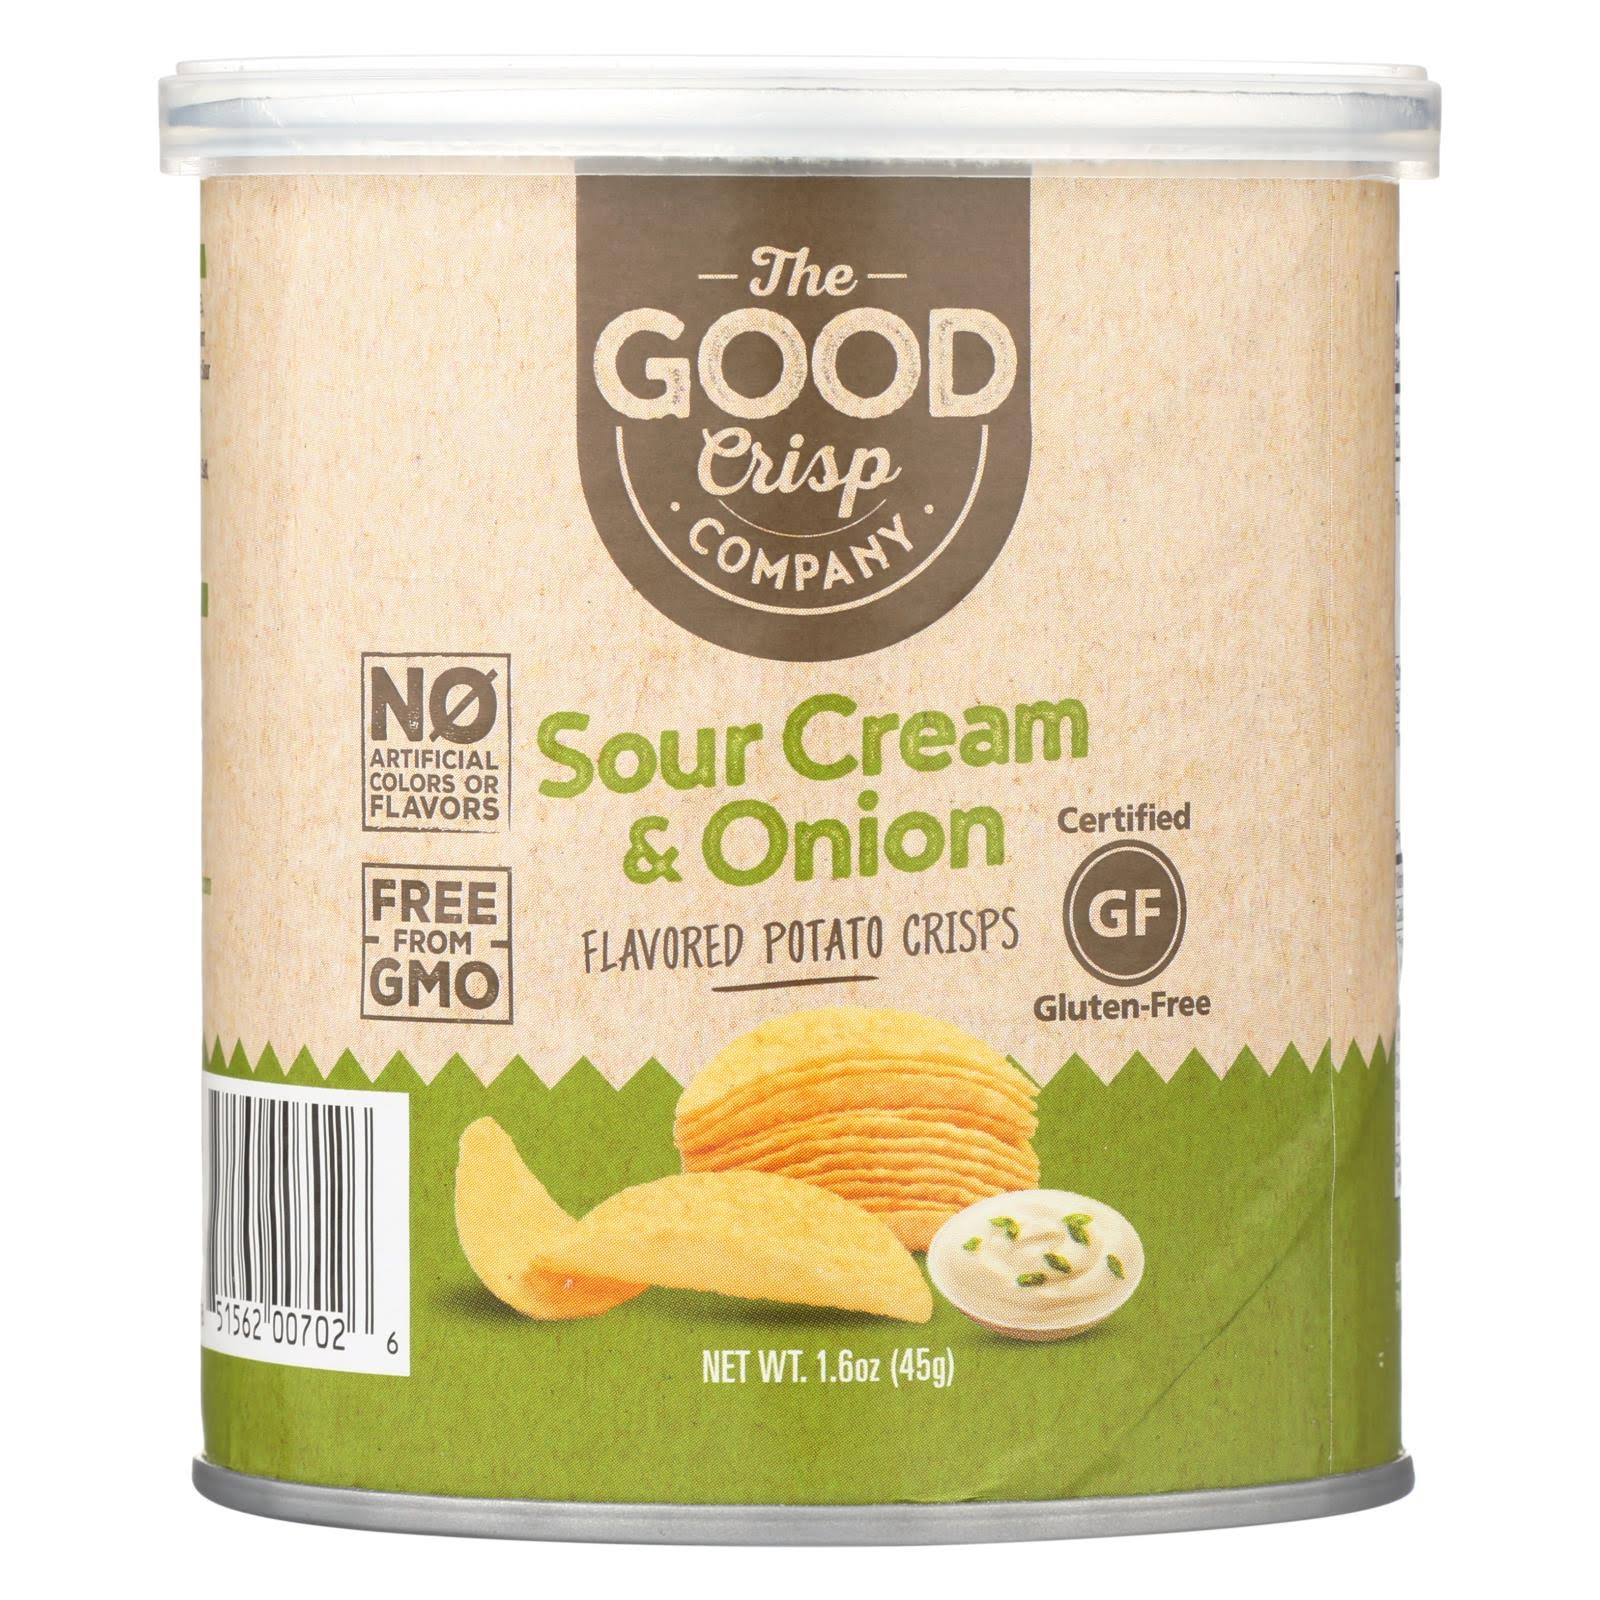 The Good Crisp Company Flavored Potato Crisps GlutenFree Sour Cream & Onion 1.6 oz.